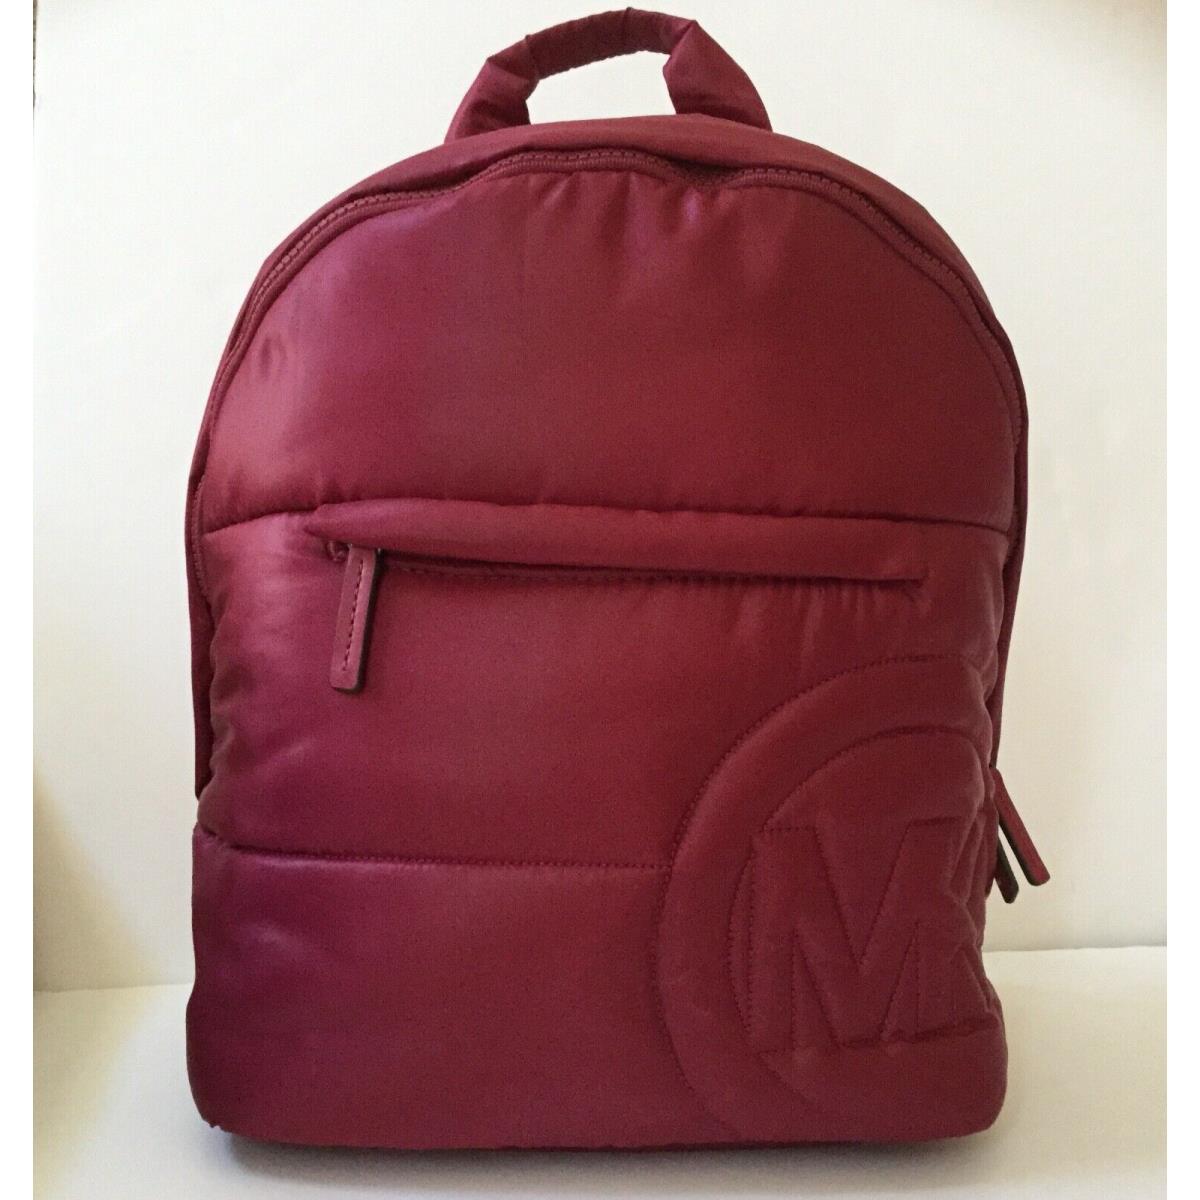 Michael Kors Rae Medium Quilted Nylon Backpack Bag Berry